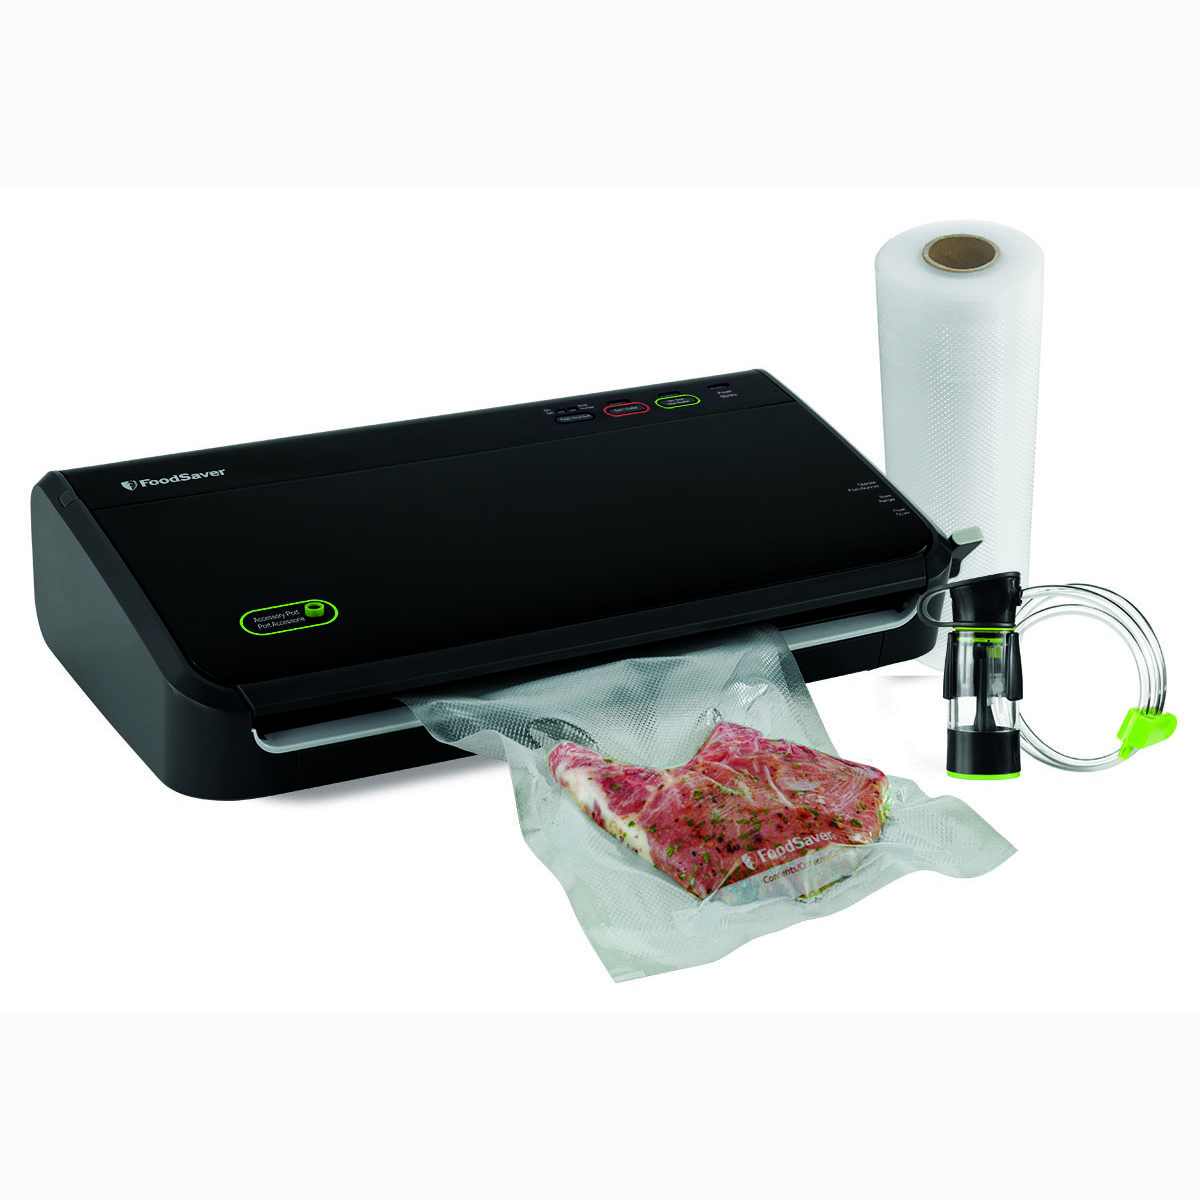 The FoodSaver® FM2100 Vacuum Sealing System